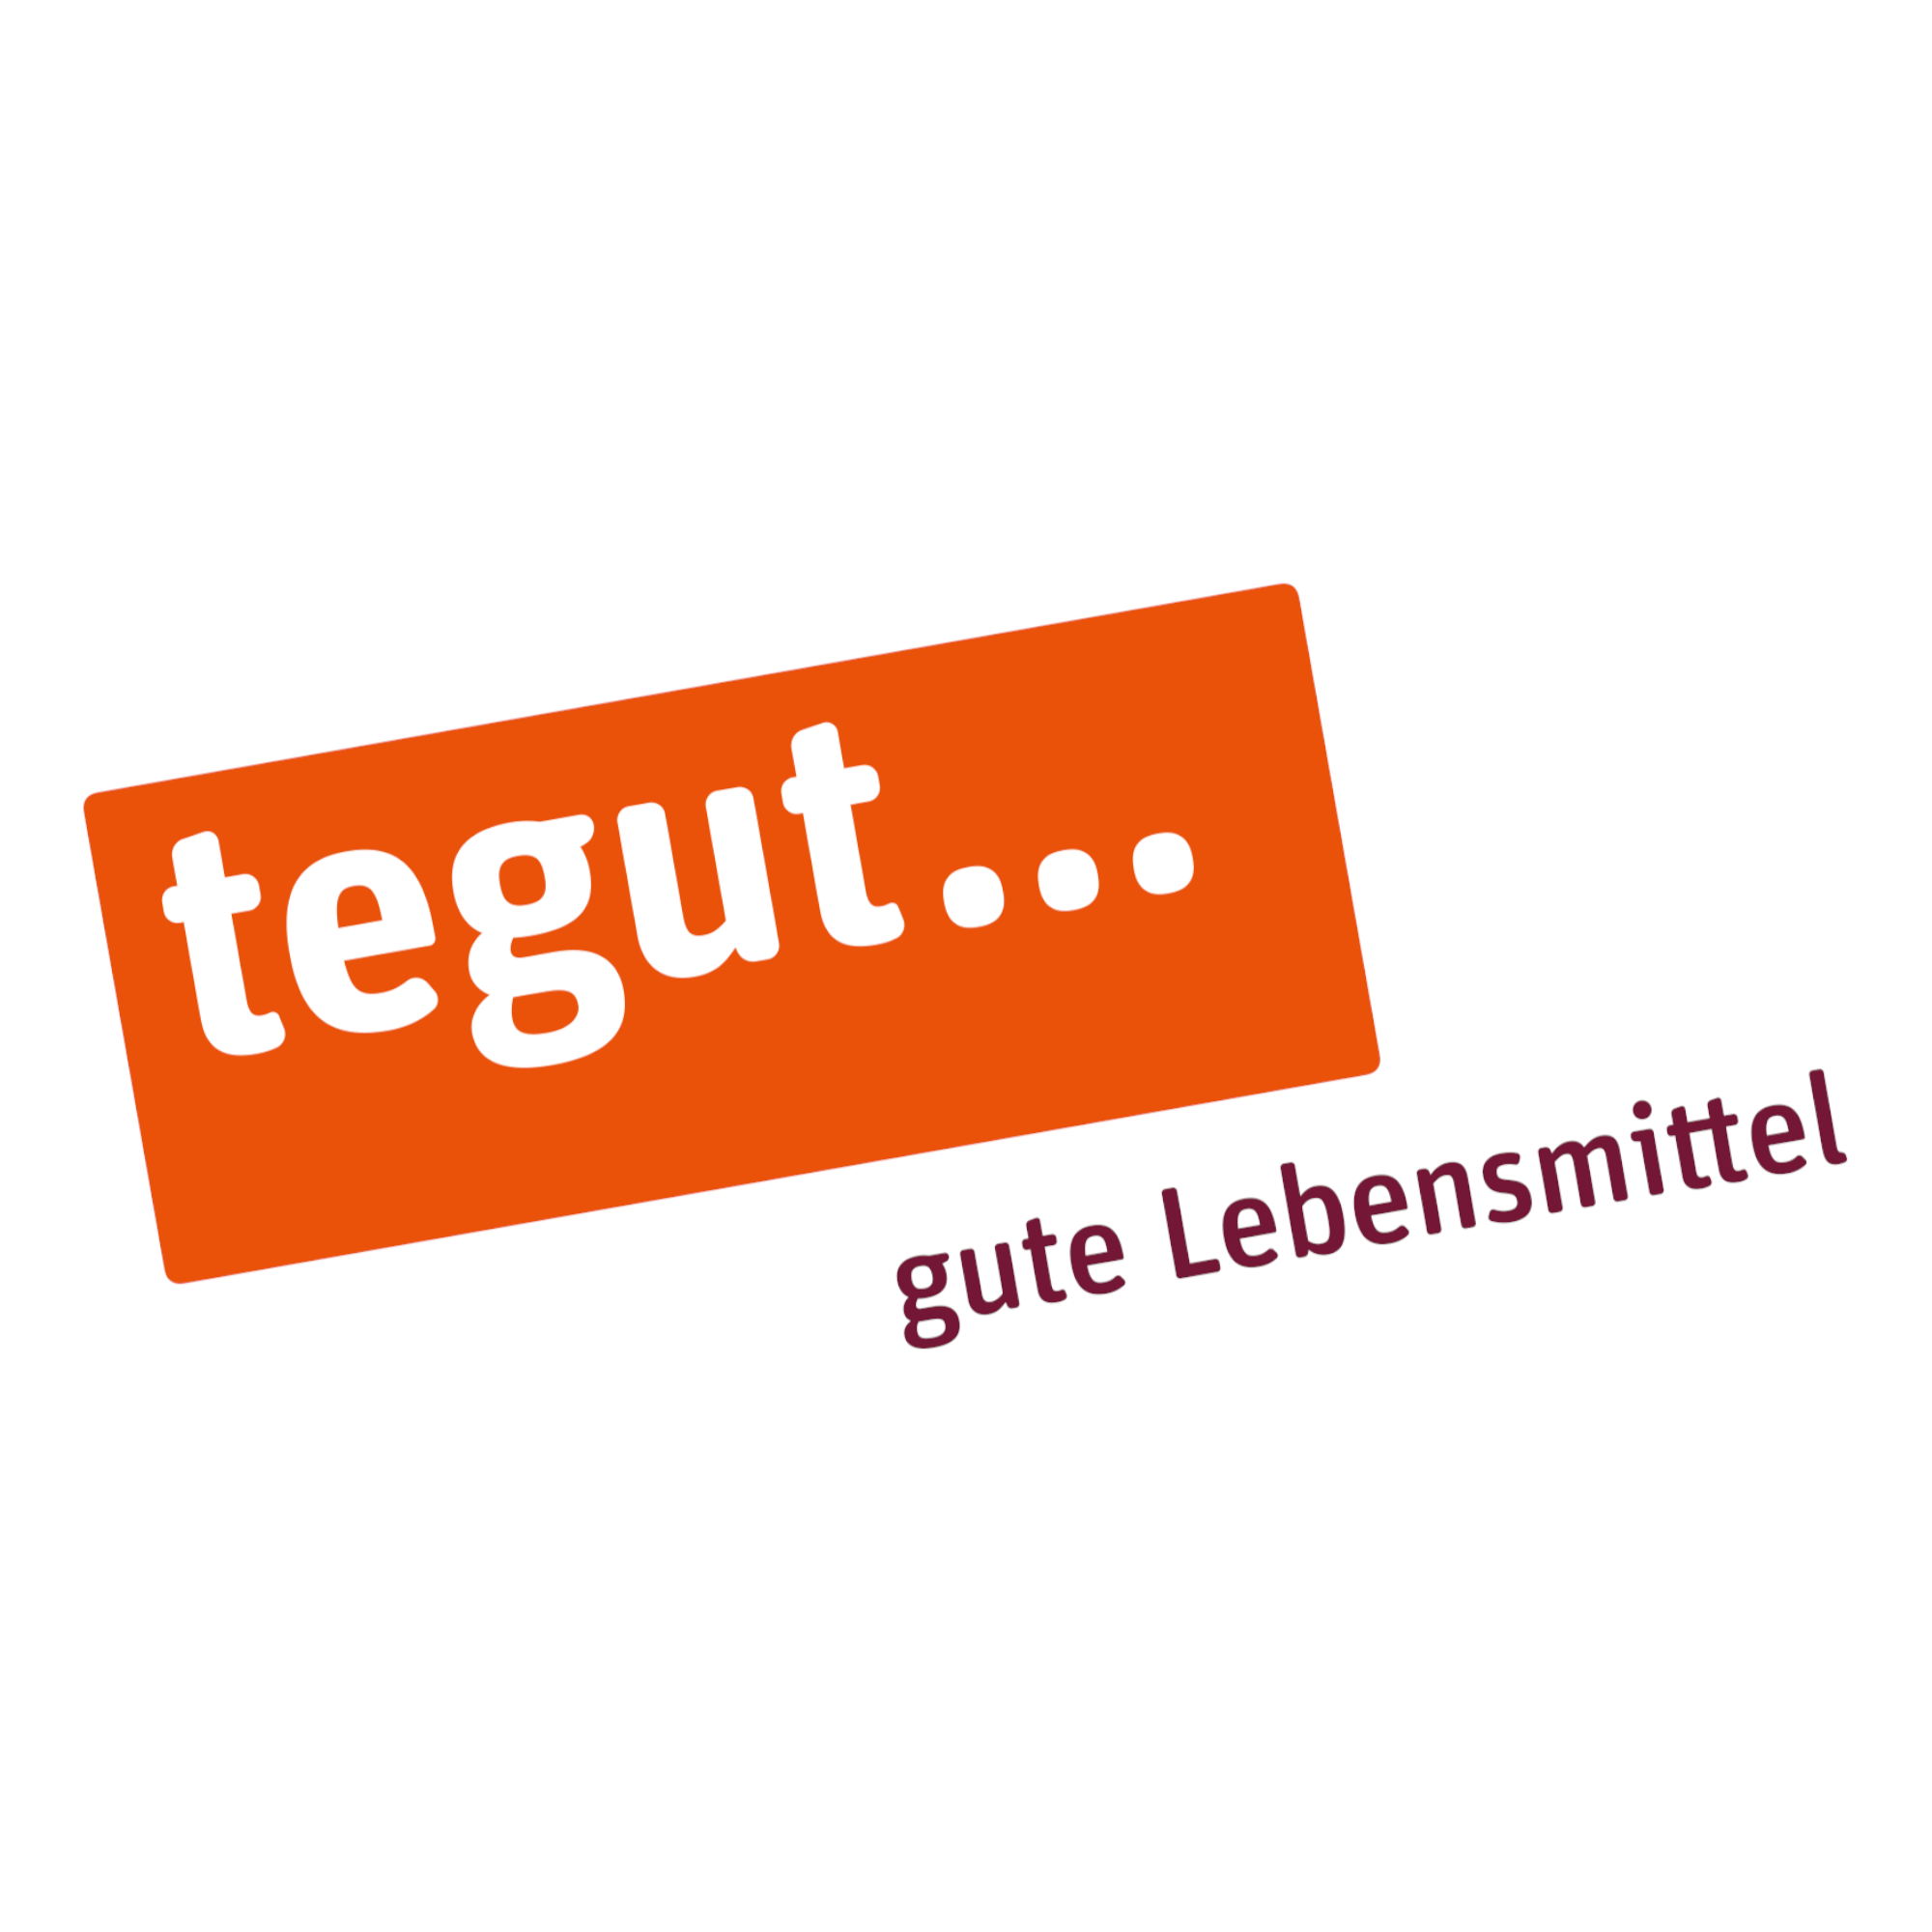 tegut... gute Lebensmittel in Kelsterbach - Logo